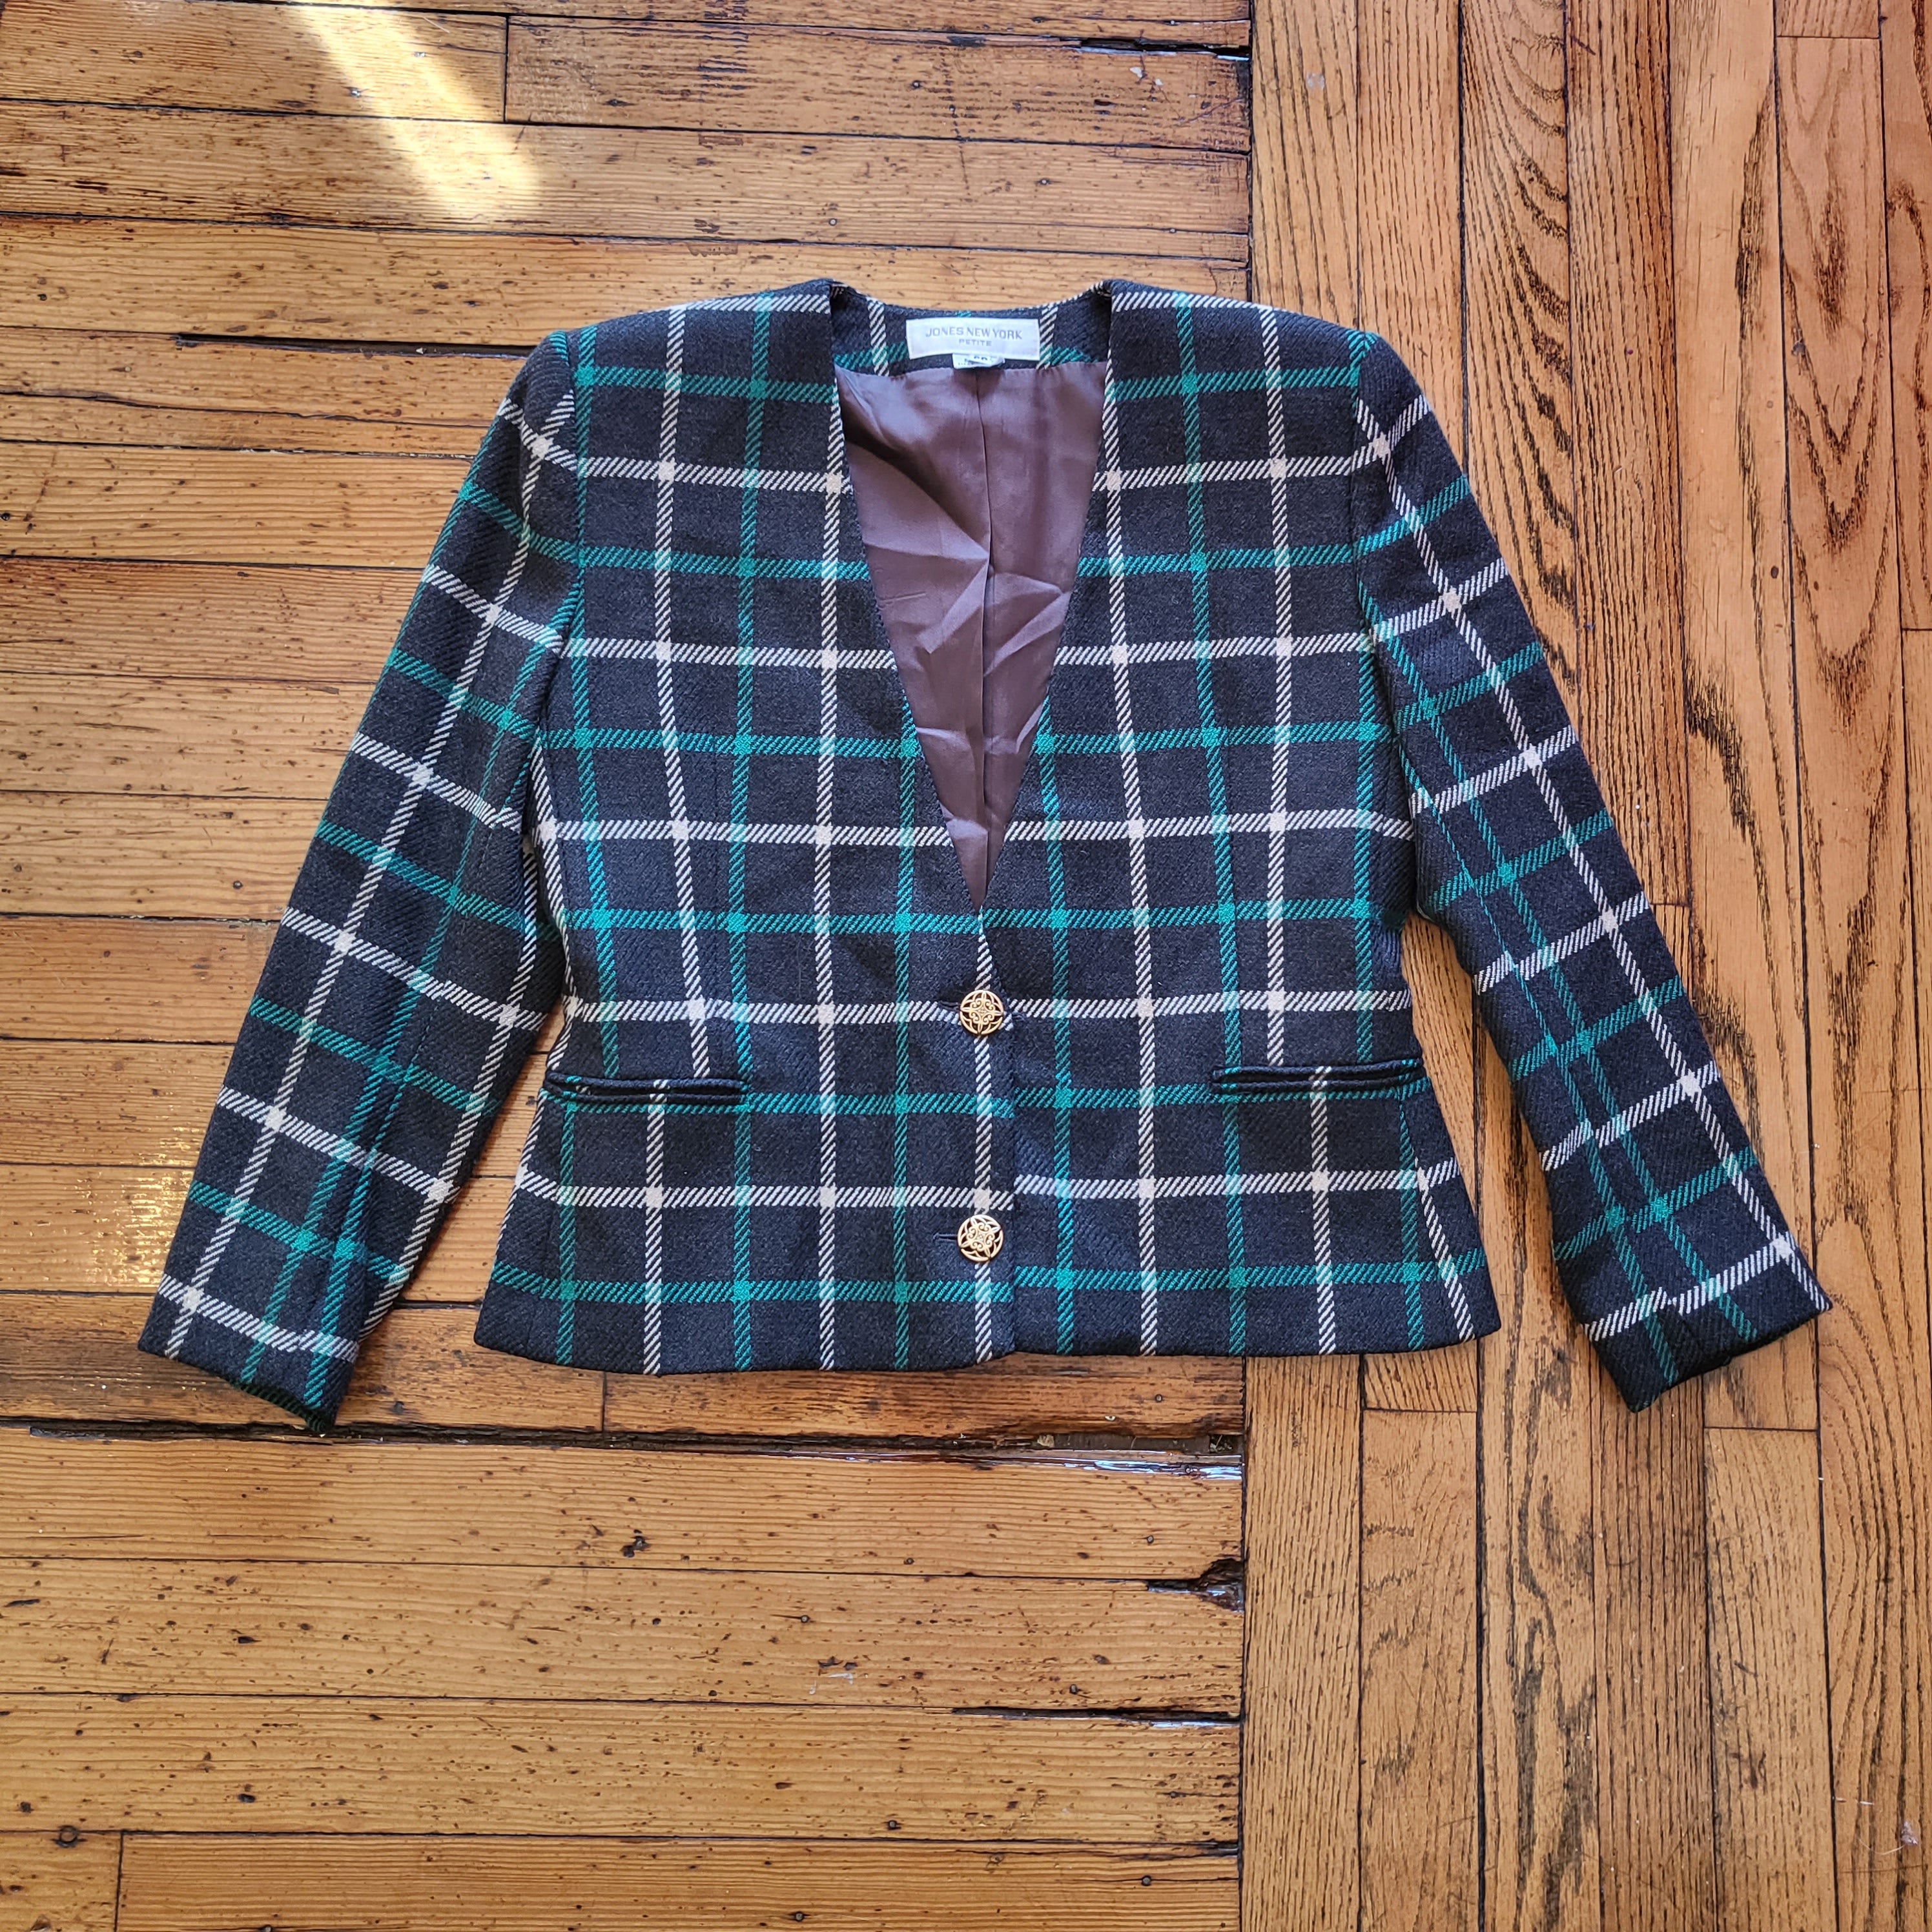 Jones New York Petite Vintage Plaid Wool Blazer Jacket Navy and Green Size 6P